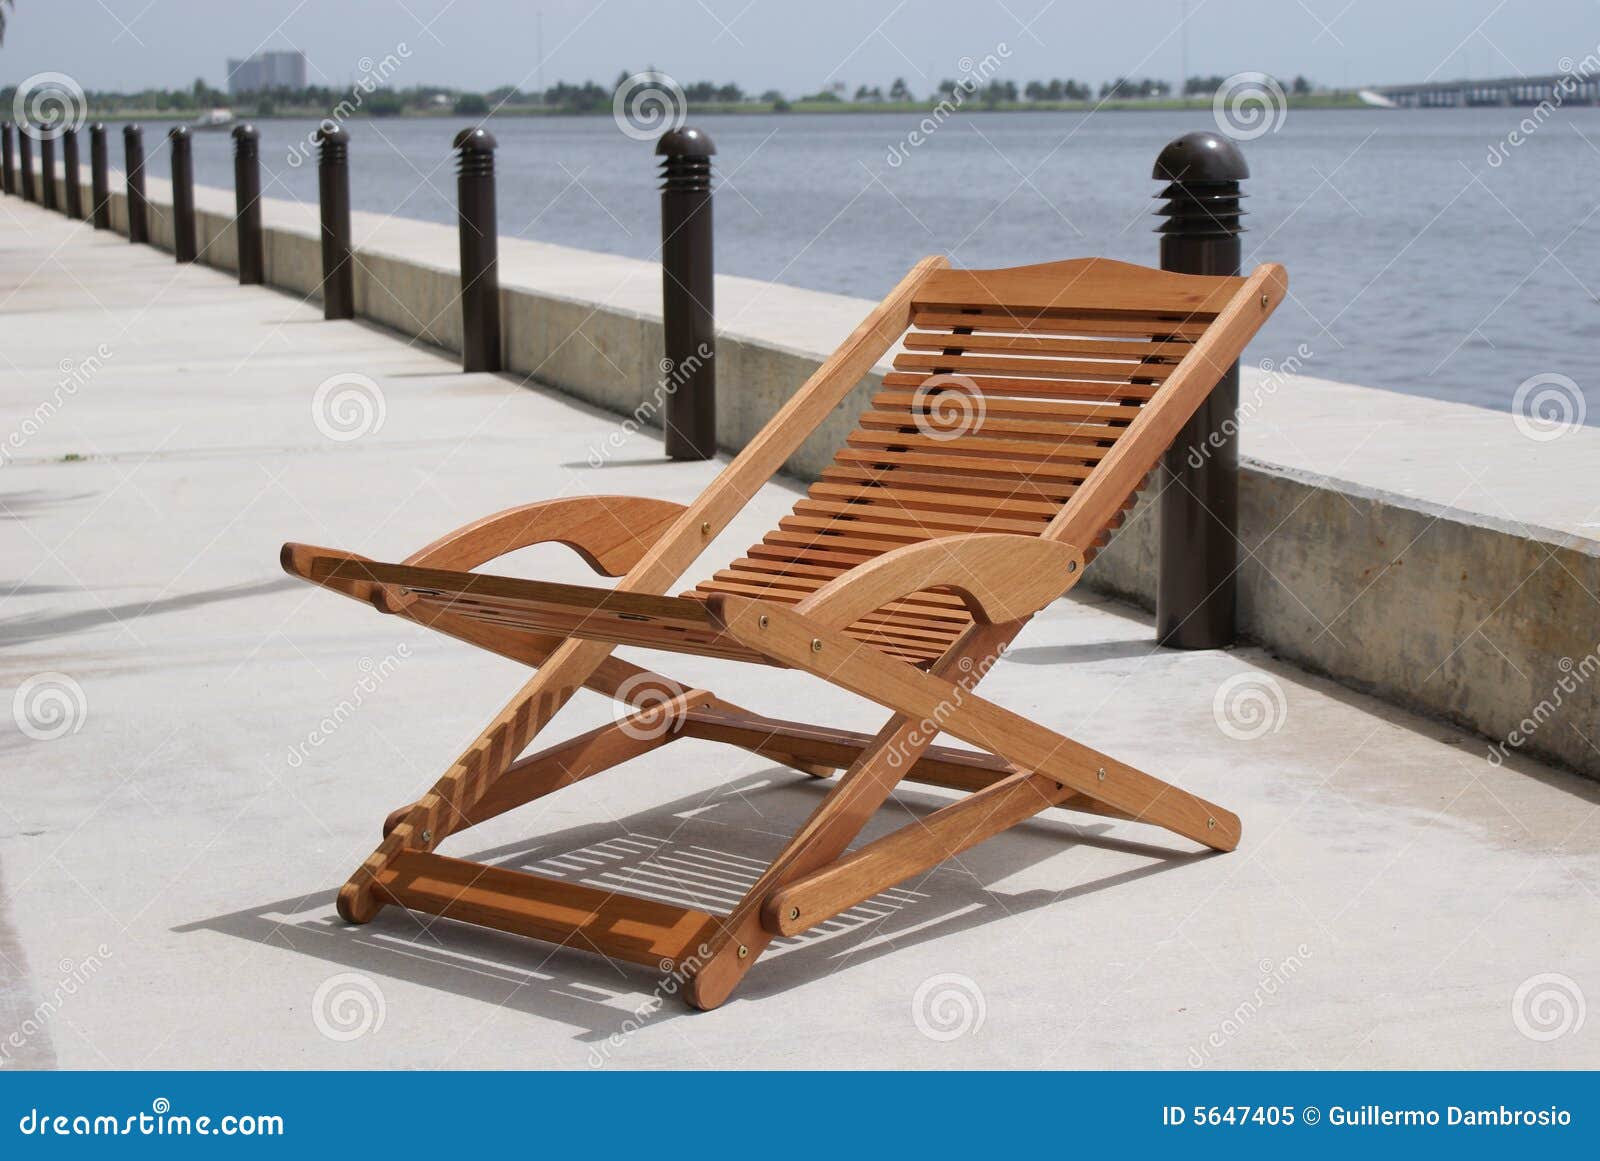 deck chair on promenade